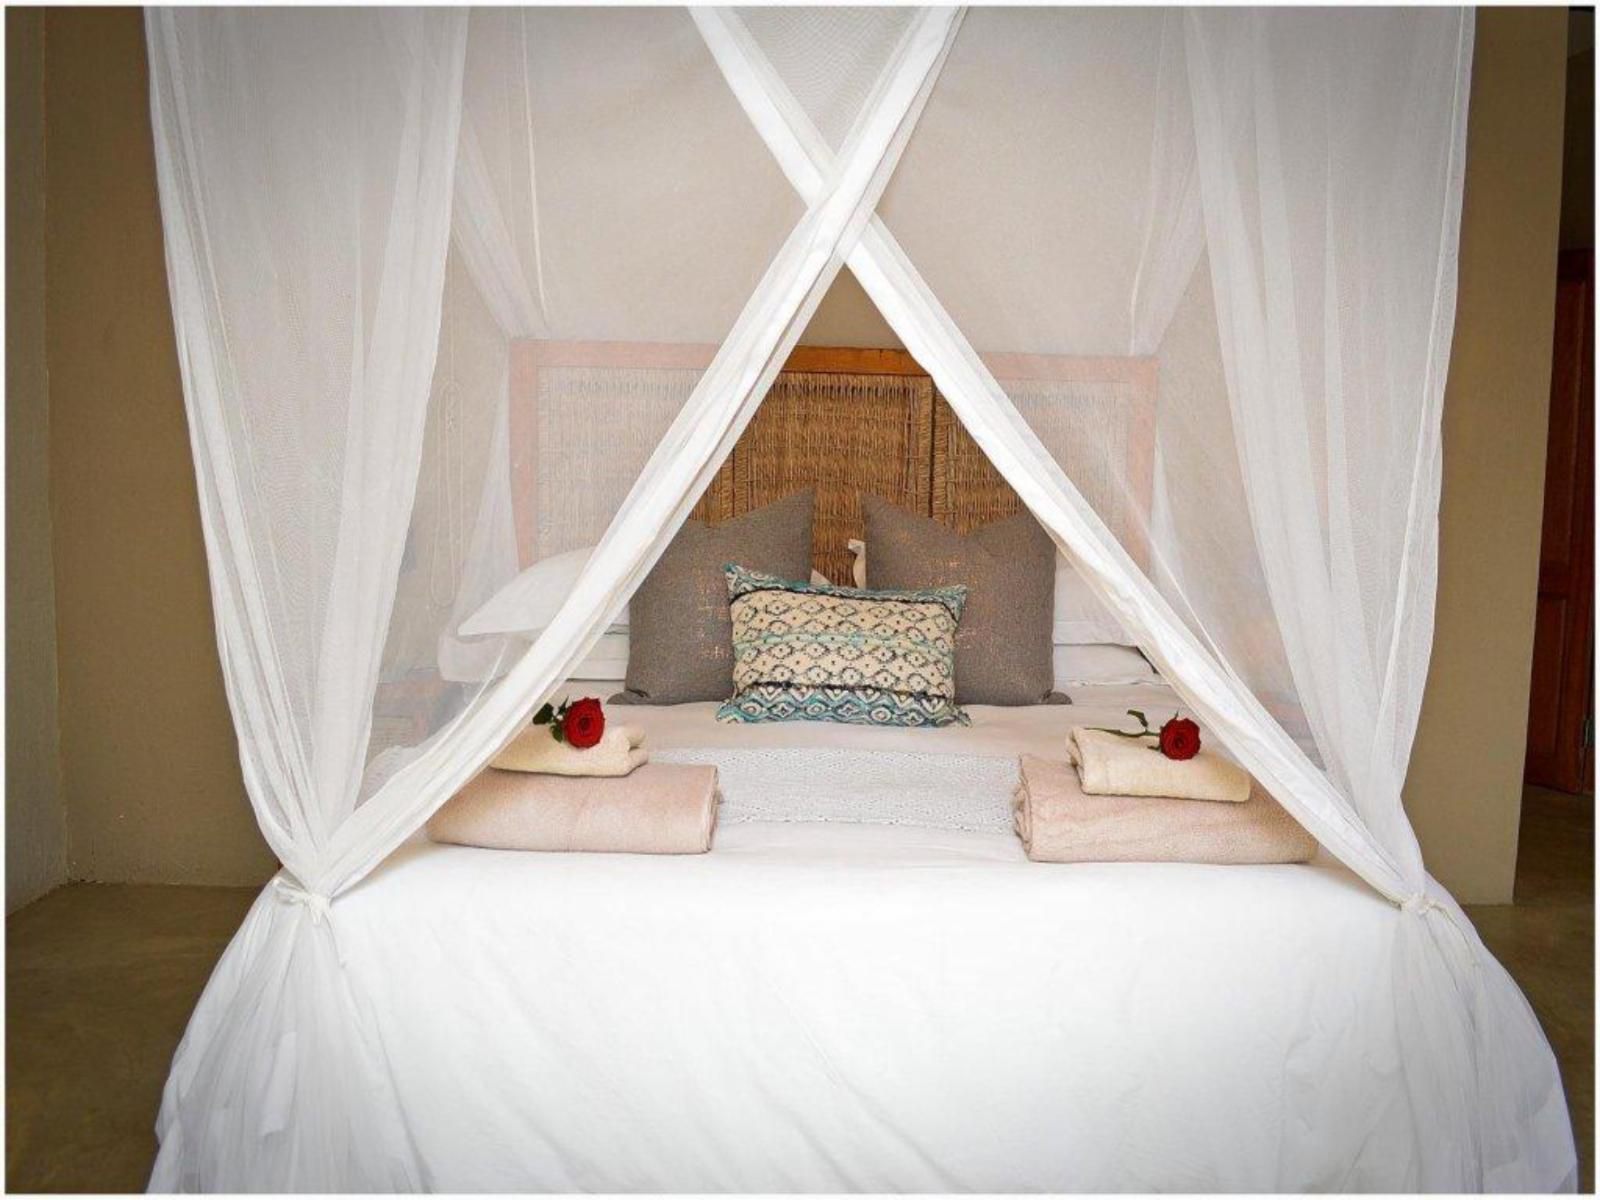 Klavati Game Lodge Hoedspruit Limpopo Province South Africa Tent, Architecture, Bedroom